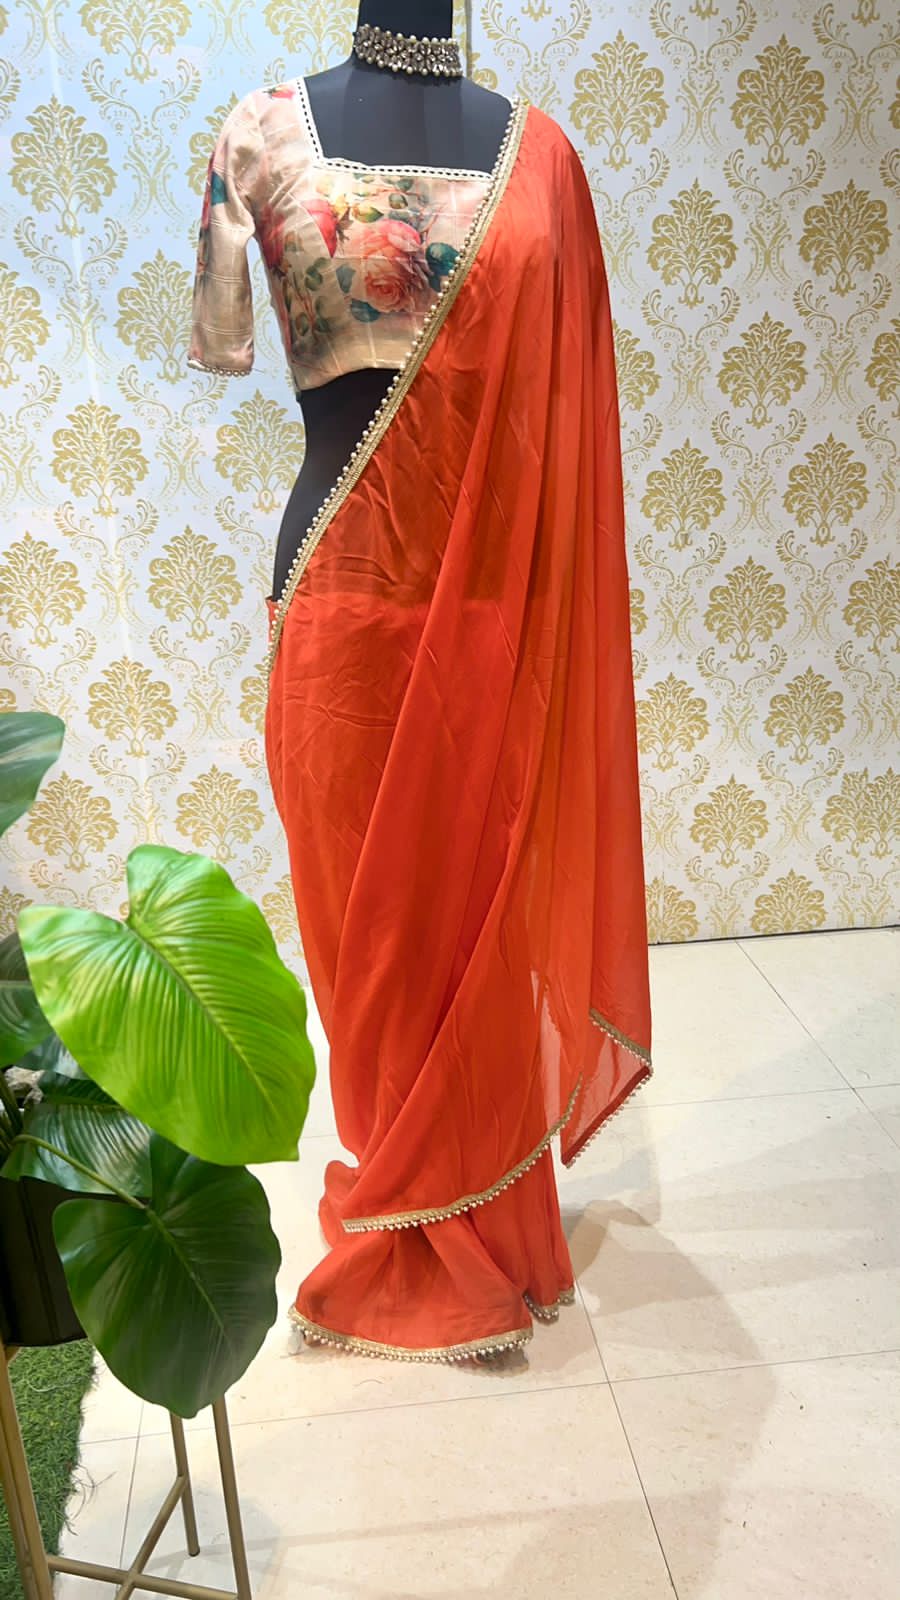 Buy Georgette Plain RED diwali durga pooja lookBlack black lace Border  Party Wedding Fashion Sarees With banglori silk blouse at Amazon.in